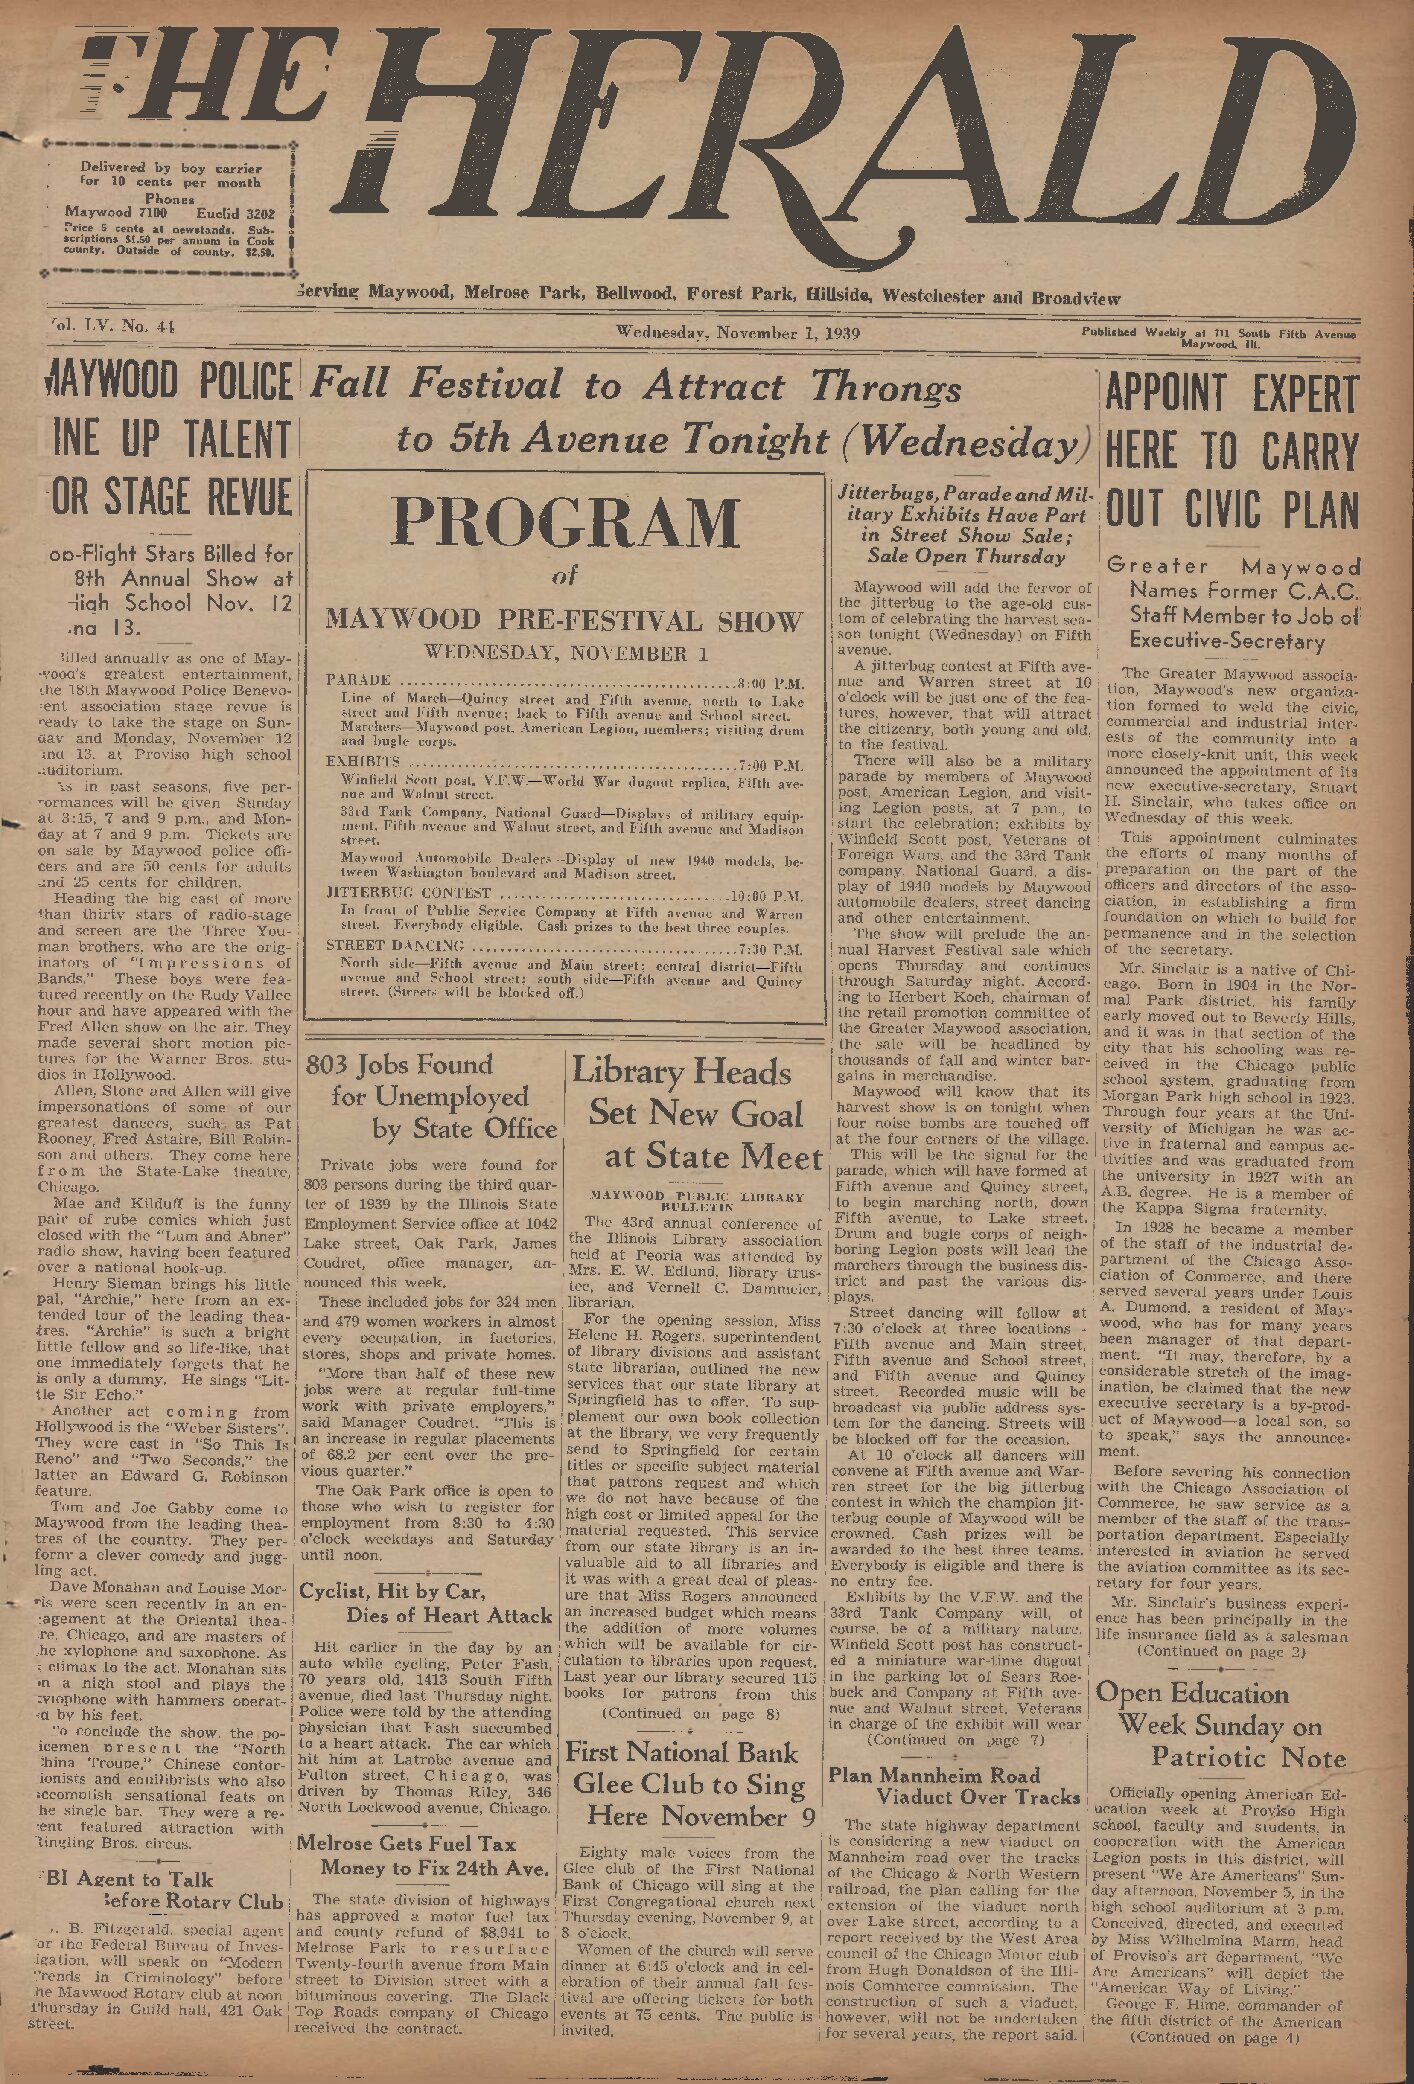 The Herald – 19391101